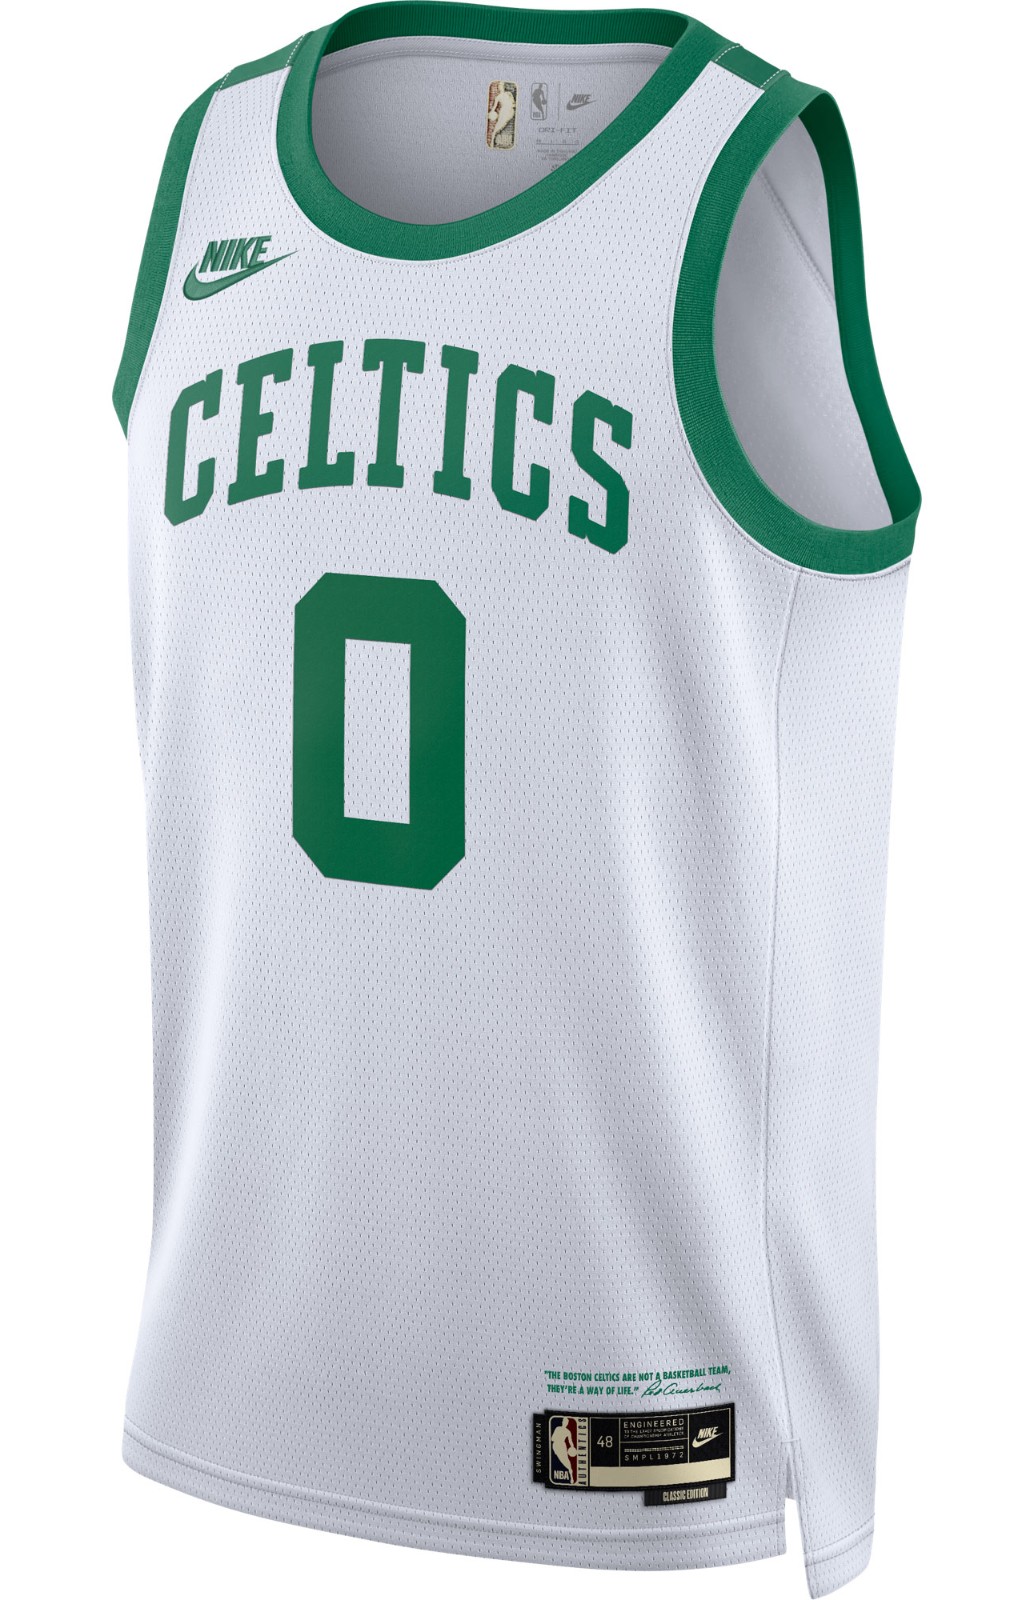 Celtics release images of jerseys for 2021-22 season, including